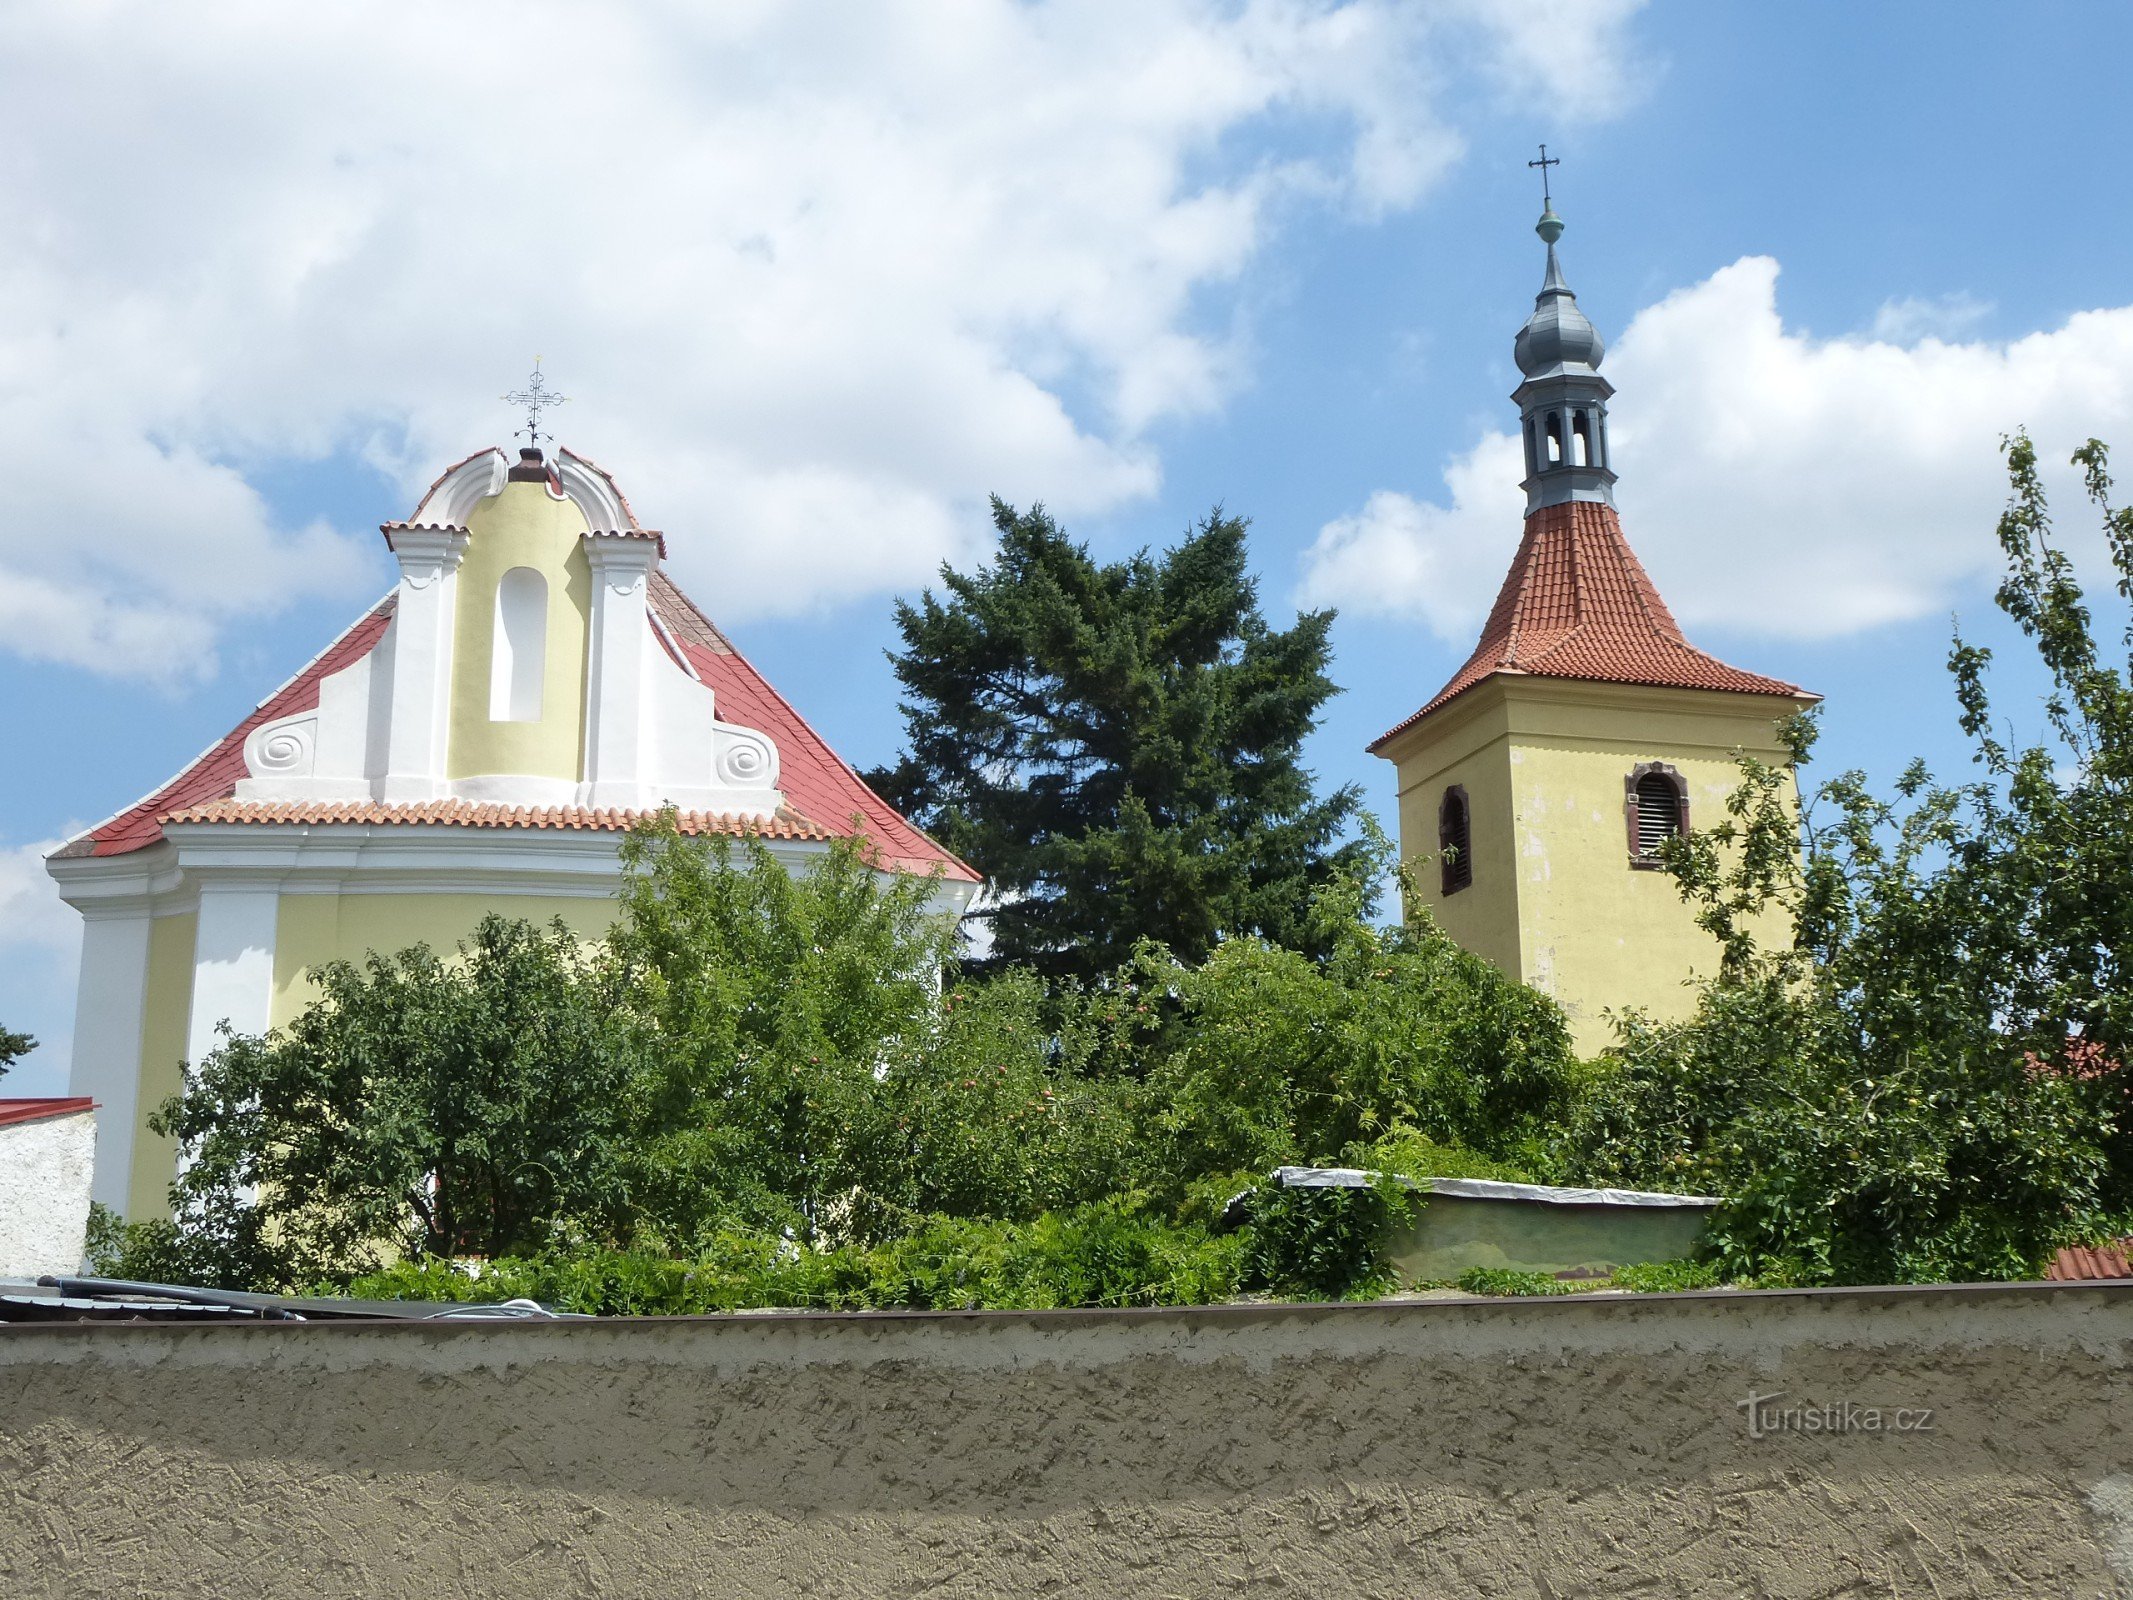 Église de St. Jean-Baptiste à Kostelec nad Černými lesy